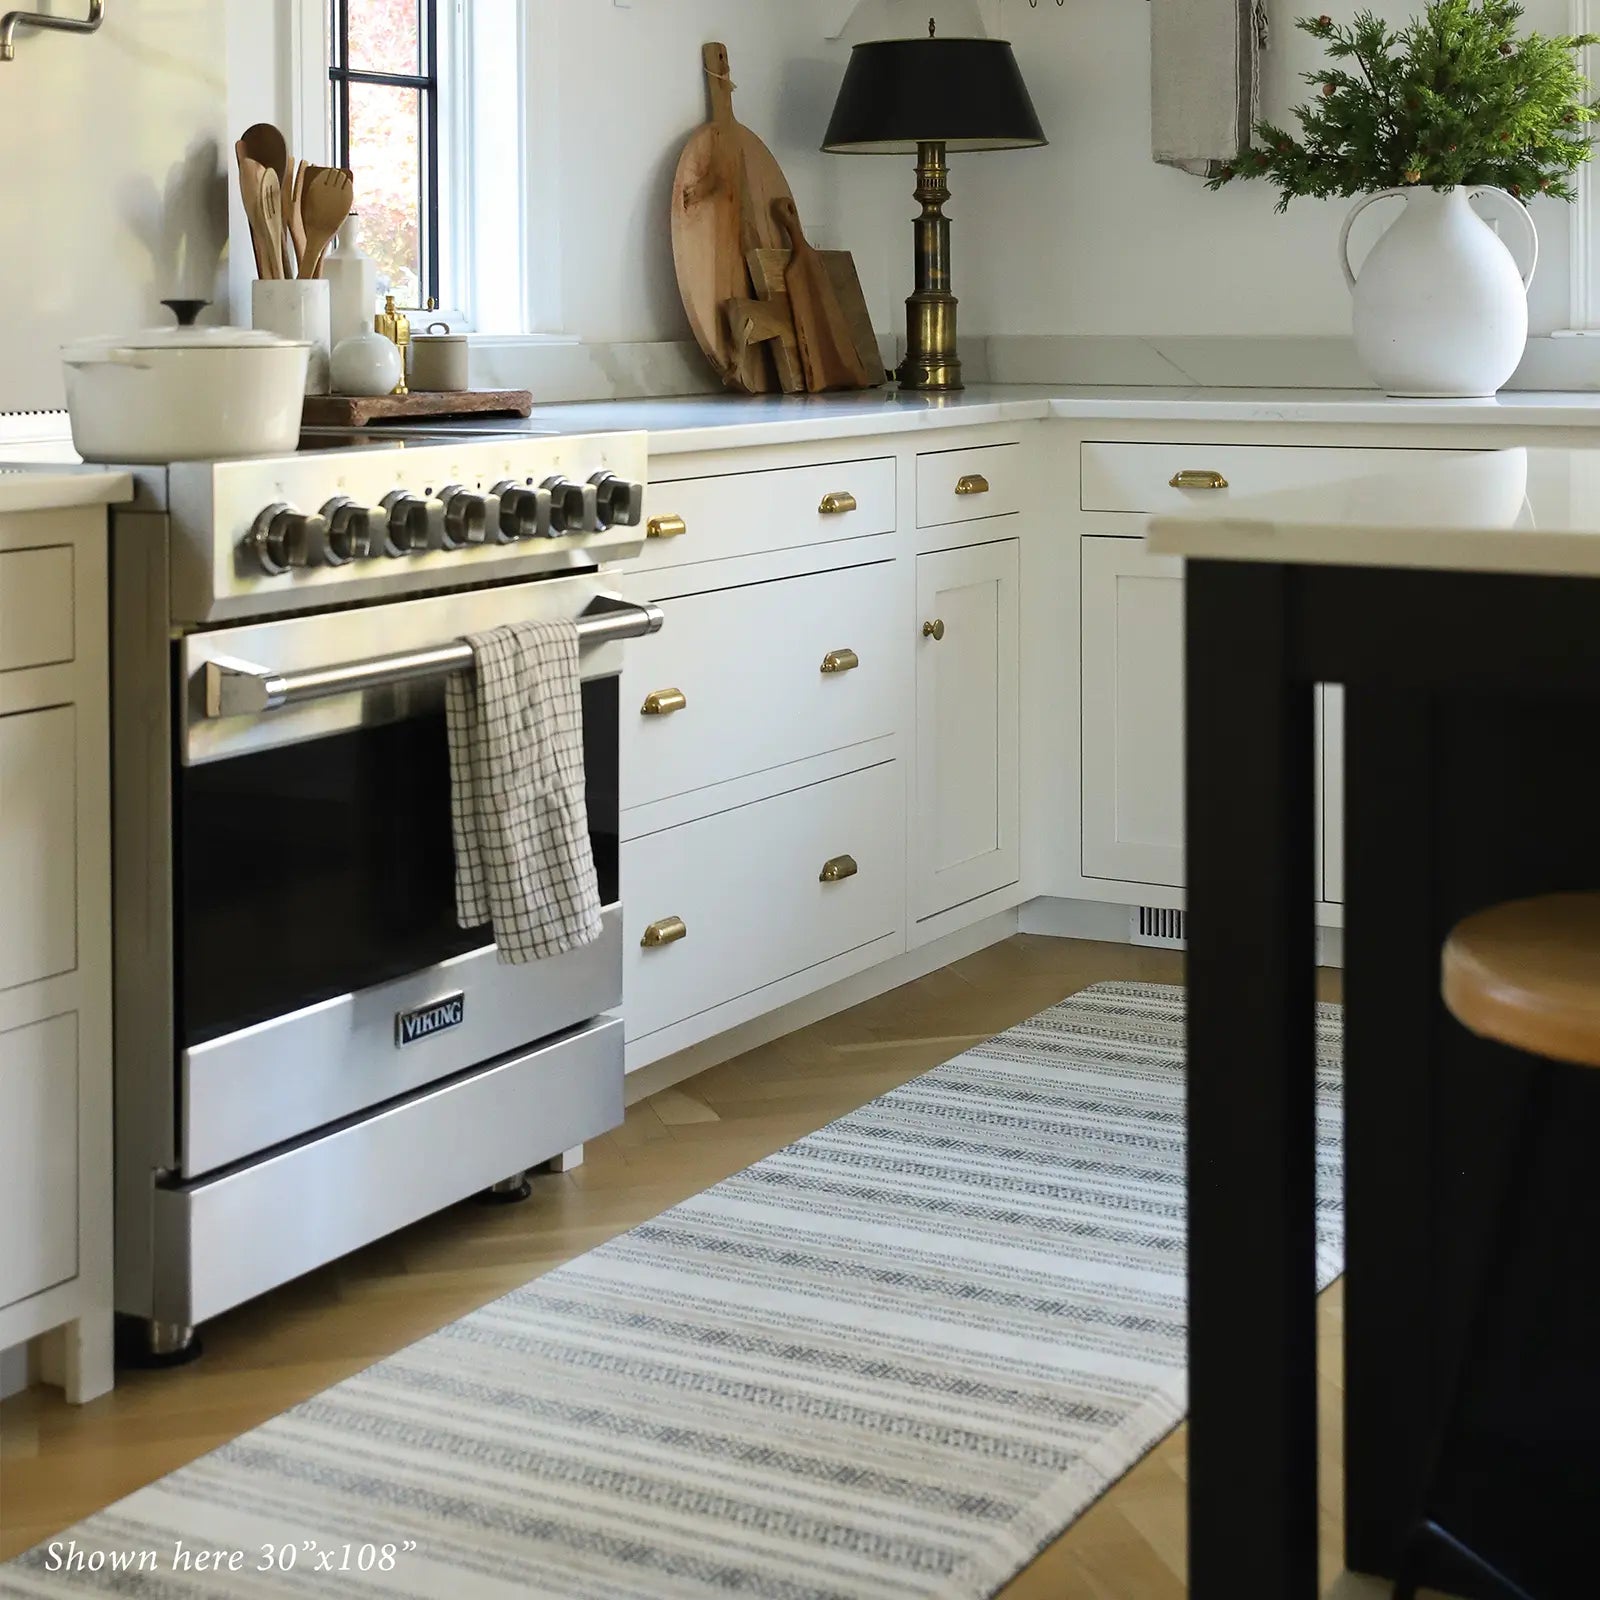 Tan and black neutral boho stripe kitchen mat shown in kitchen in size 30x108